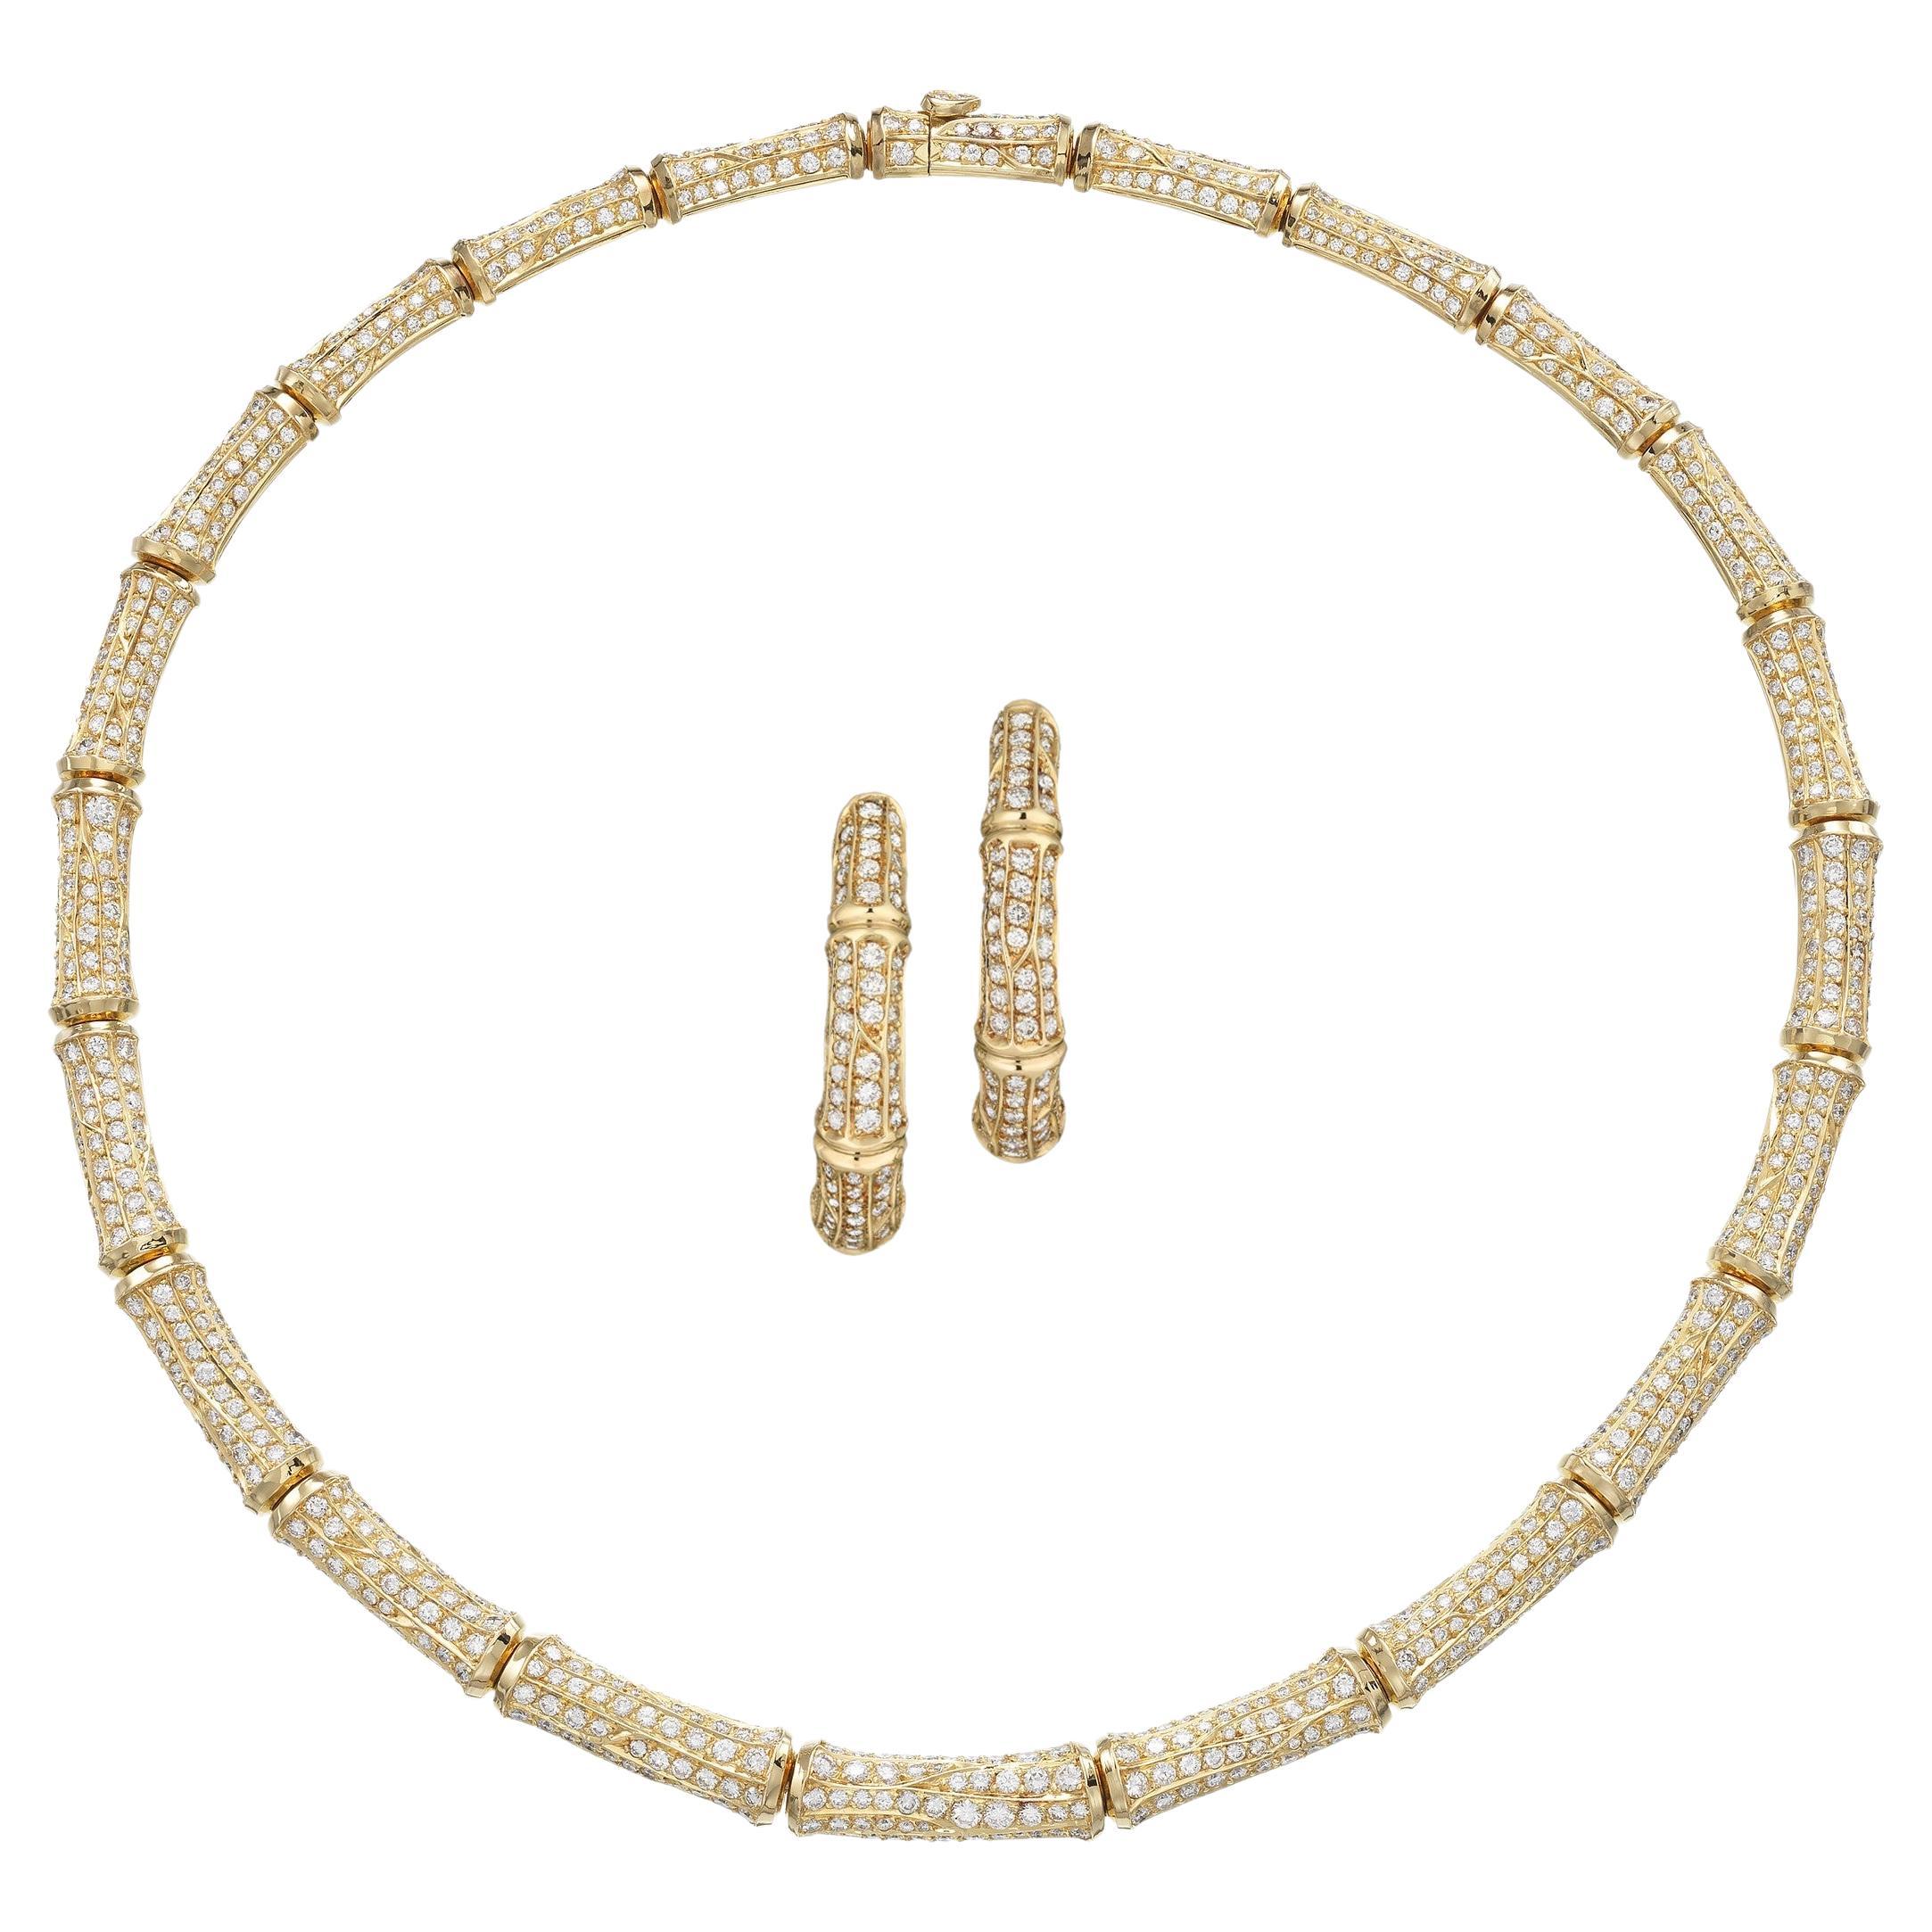 Cartier Bamboo 26cts Diamond Suite in 18K Gold Halskette und Ohrringe